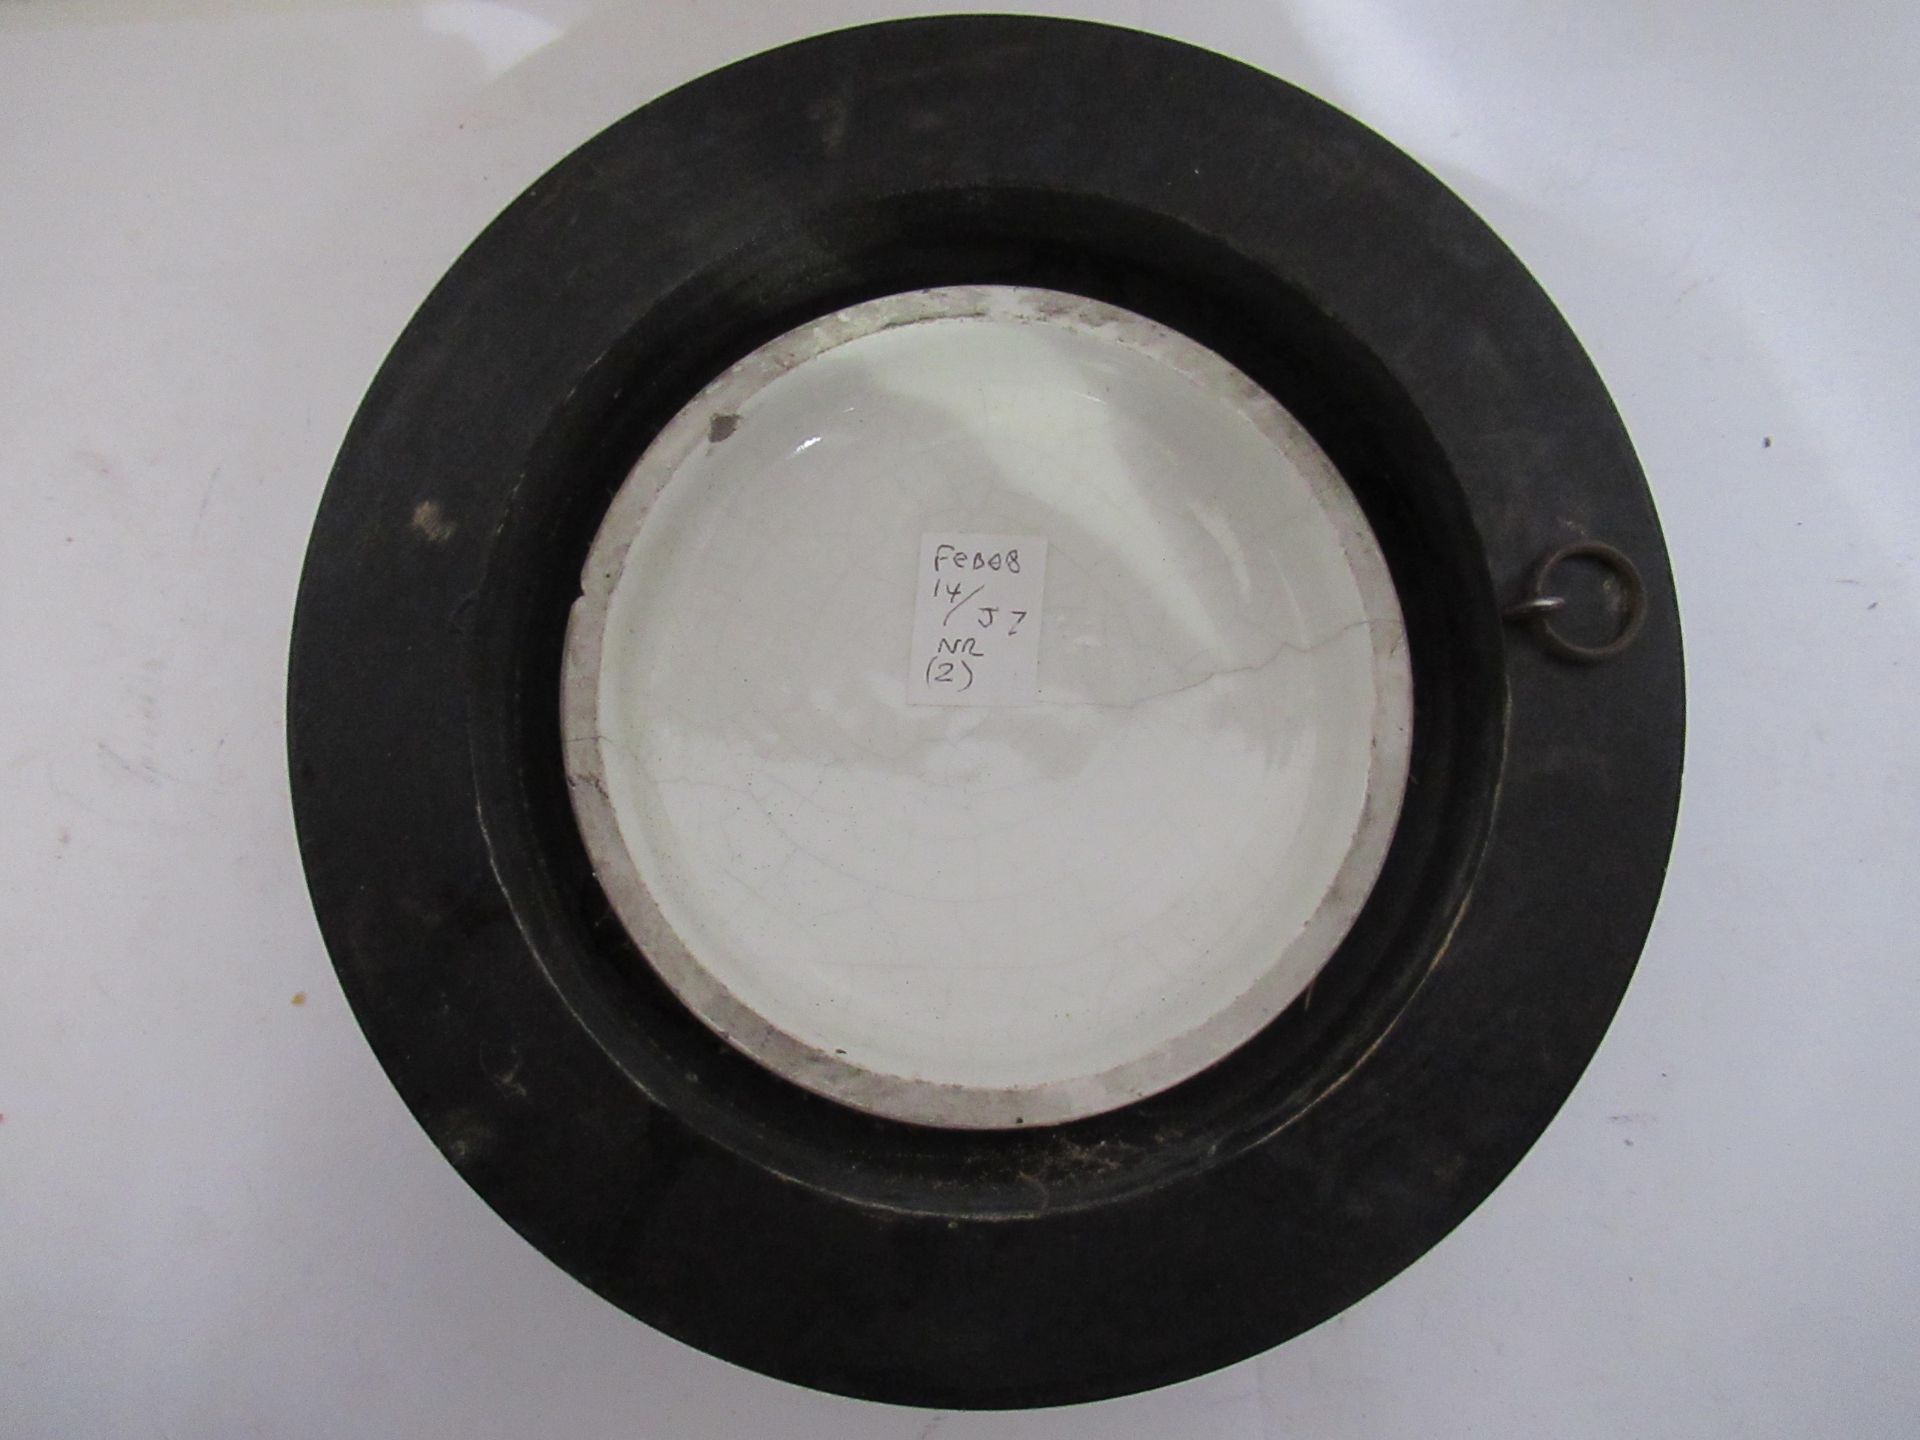 4x Prattware lids including Both Alike, The Cavalier etc - Image 10 of 10